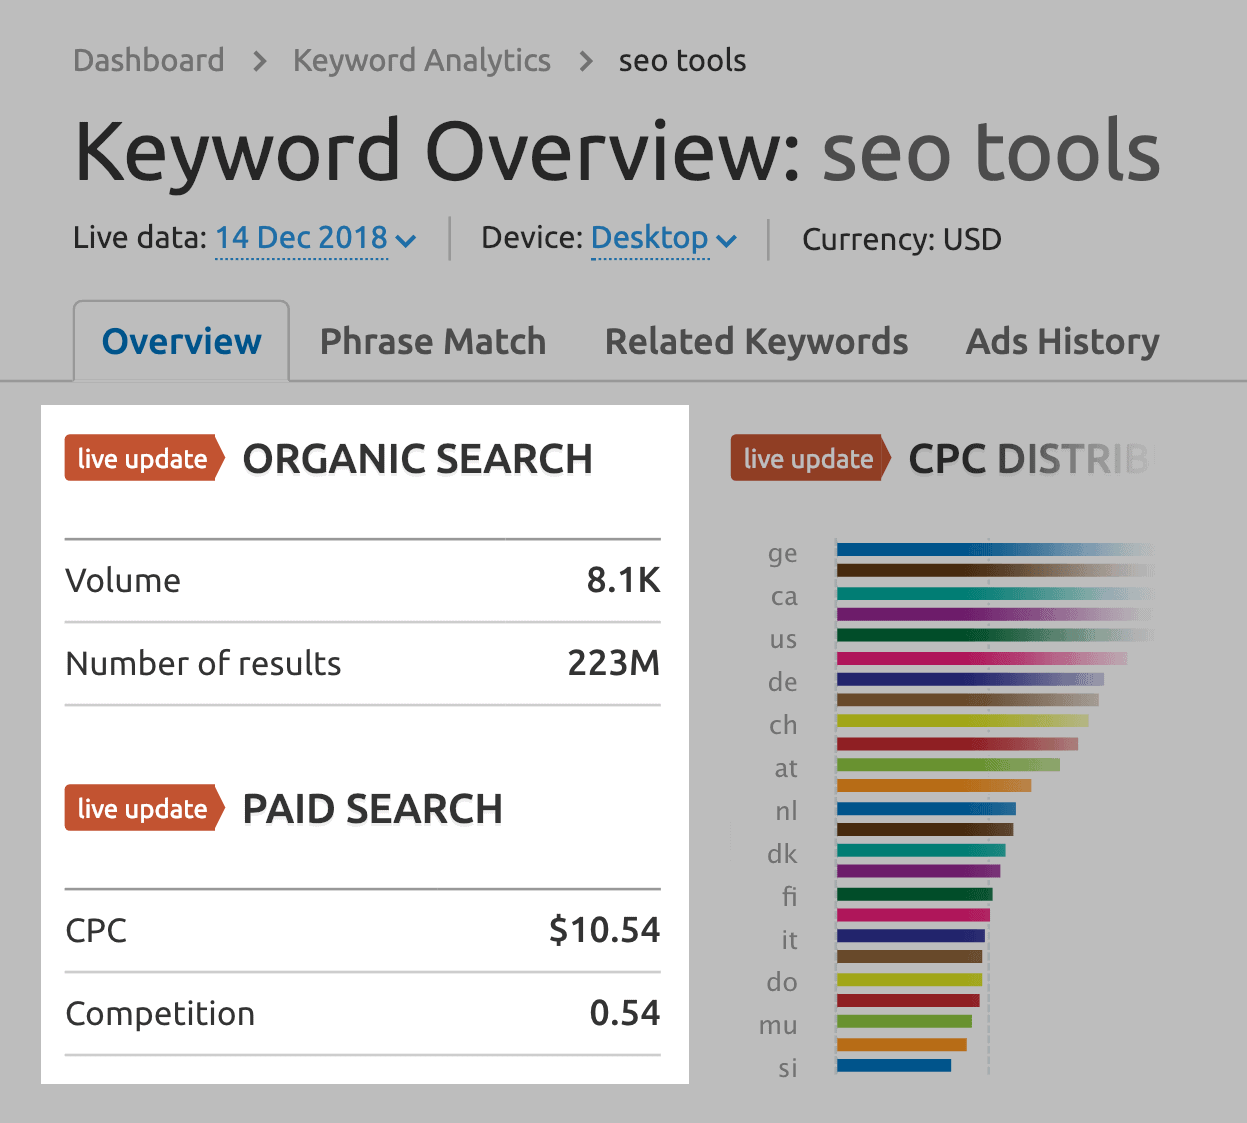 SEMRush – "seo tools" – Search volume data from Google Keyword Planner